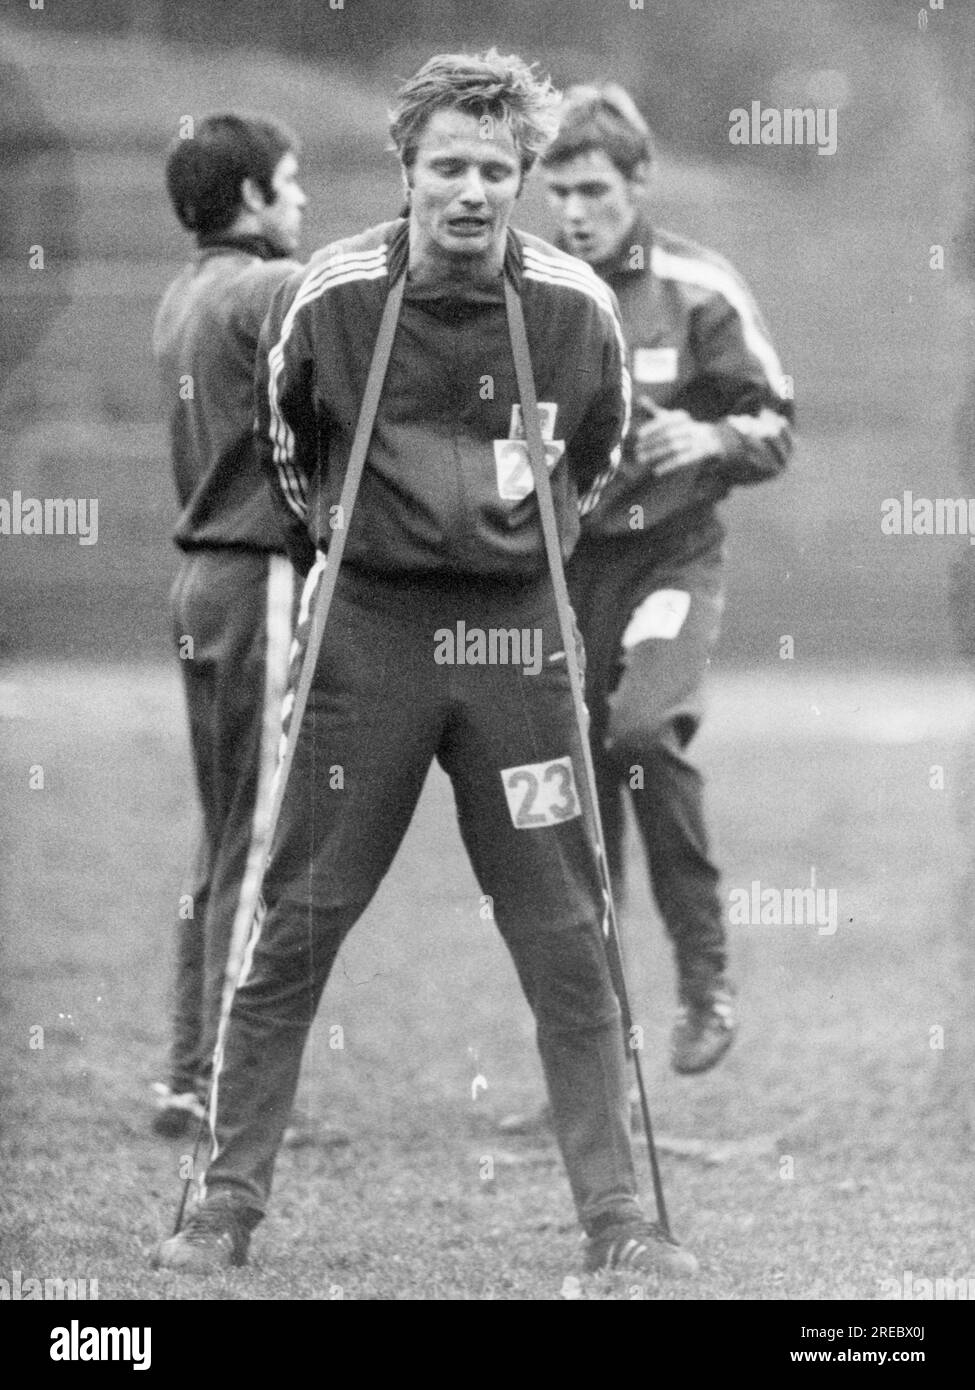 Varga, Zoltan, 1.1.1945 - 9,4.2010, calciatore ungherese, centrocampista dell'Hertha BSC, allenamento, DIRITTO AGGIUNTIVO-CLEARANCE-INFO-NOT-AVAILABLE Foto Stock